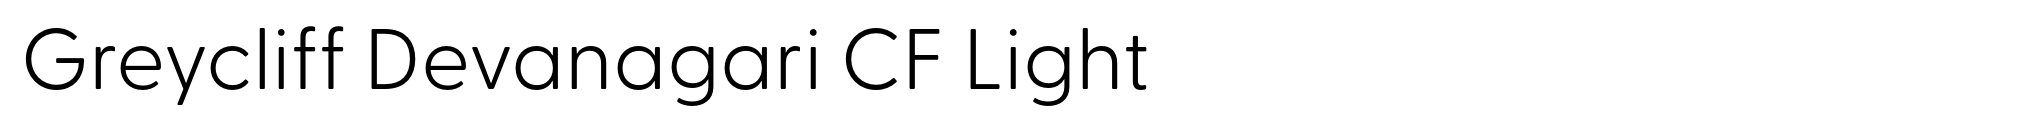 Greycliff Devanagari CF Light image